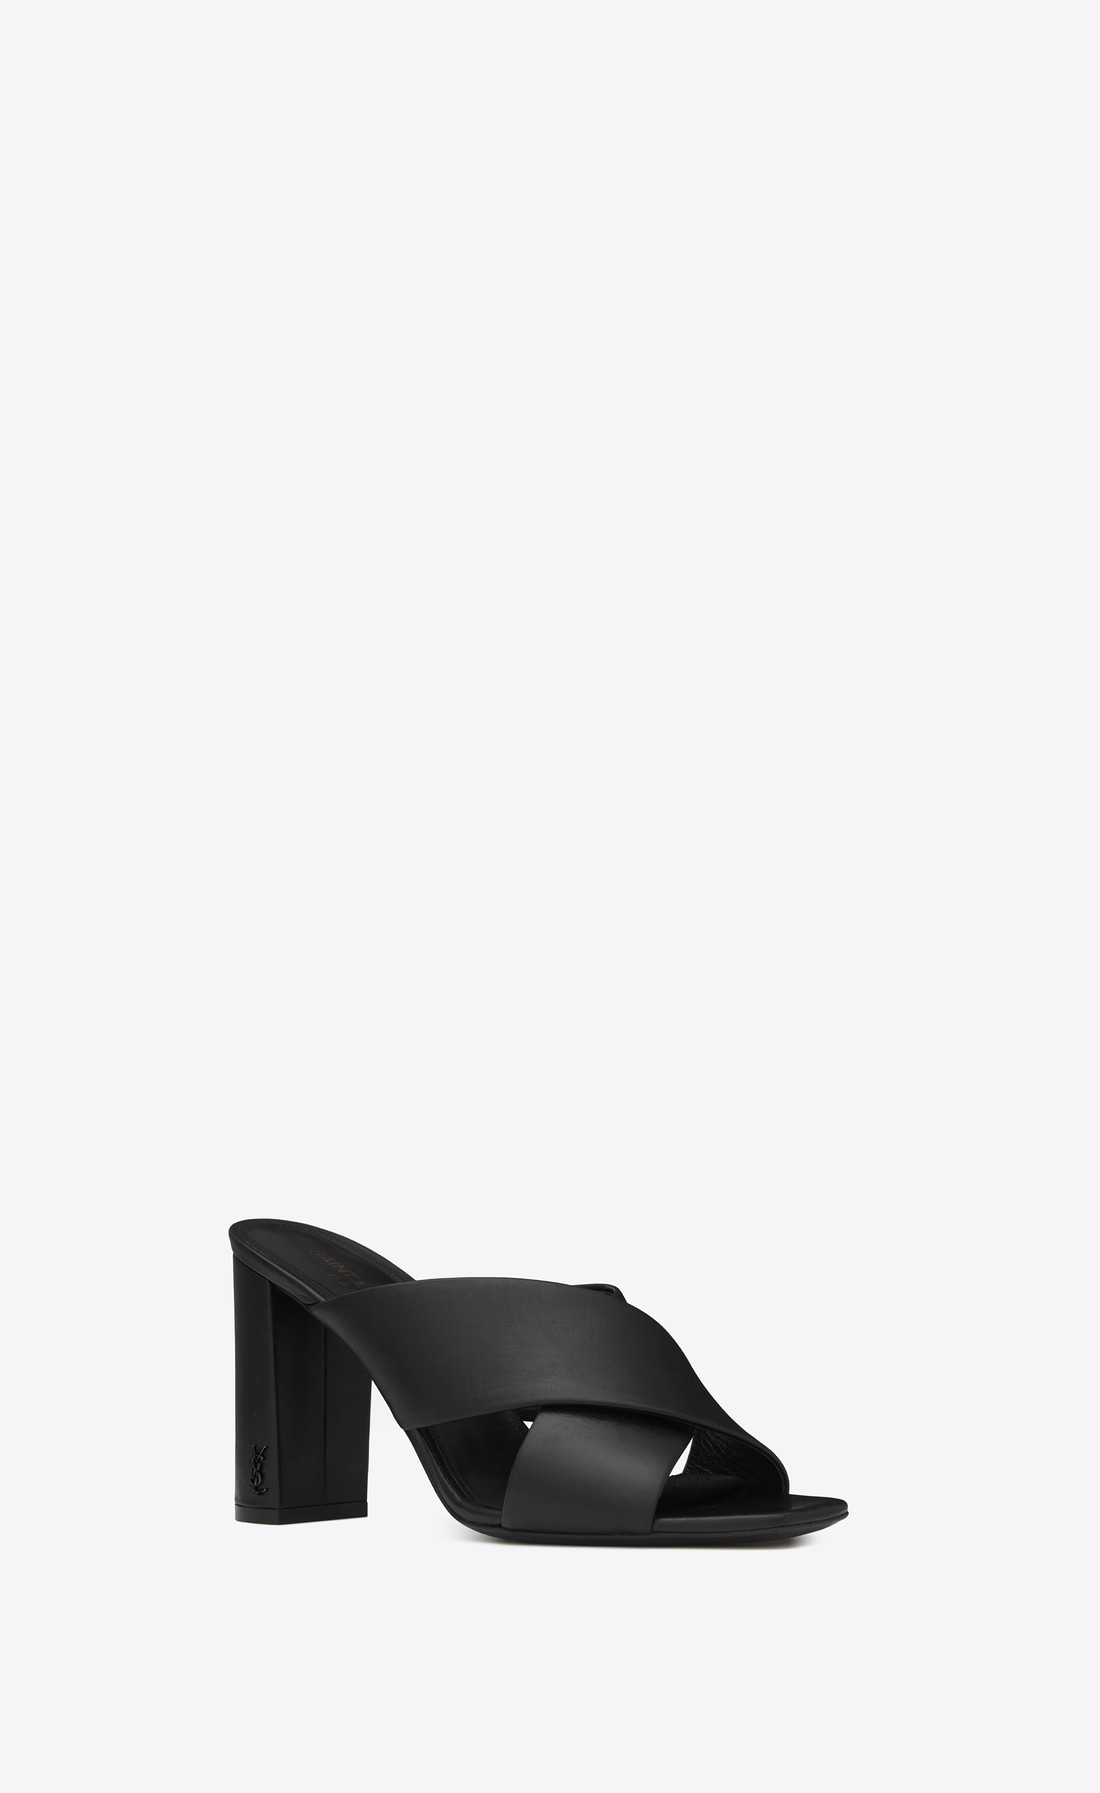 Saint Laurent LouLou Black Leather Buckle Sandals – Luxe Hudson Valley